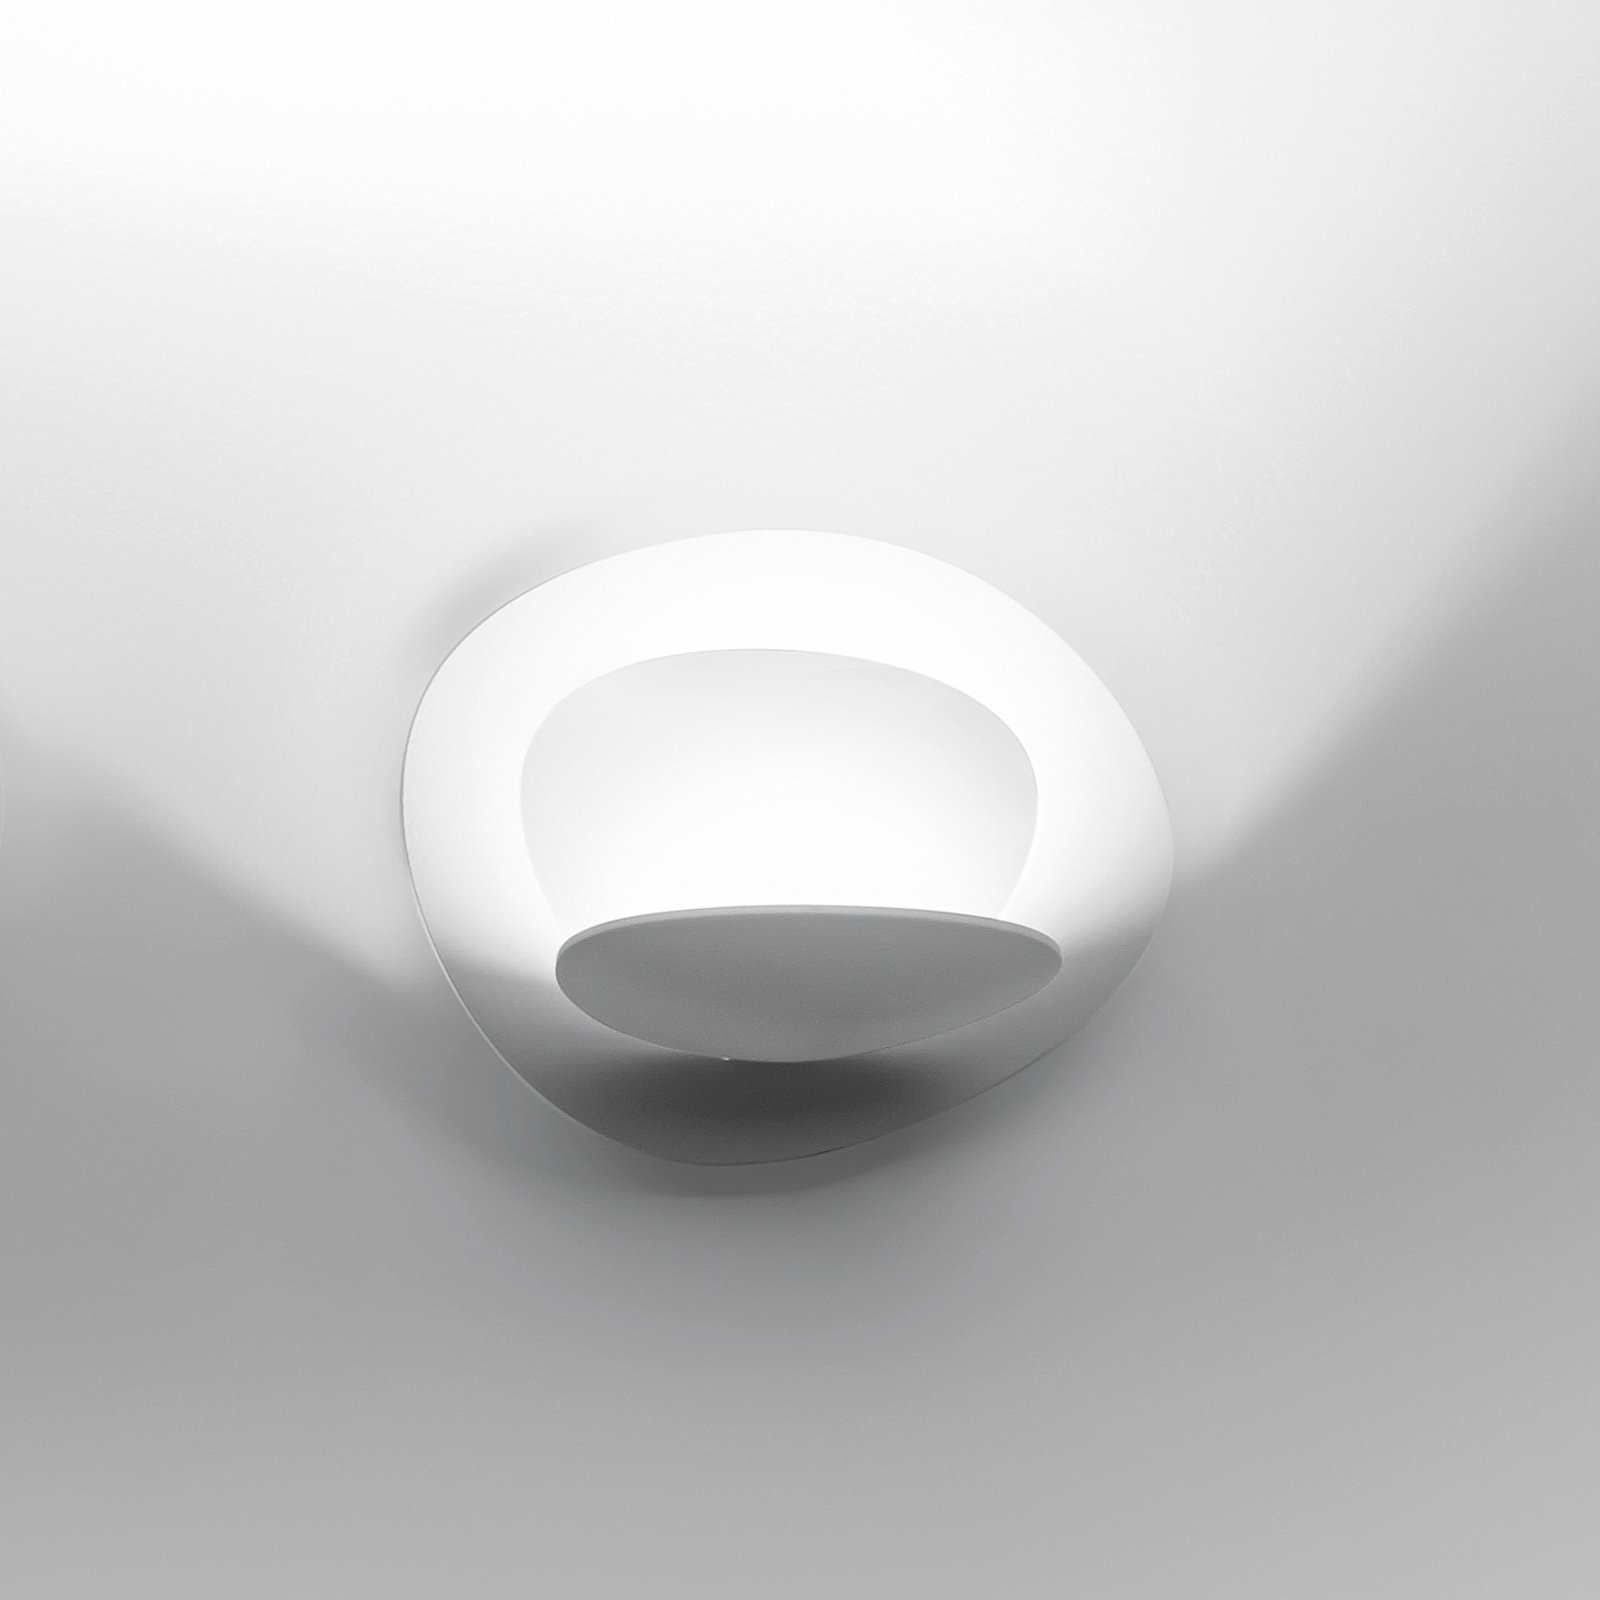 Artemide Pirce Micro LED nástenné svietidlo biele 2 700 K